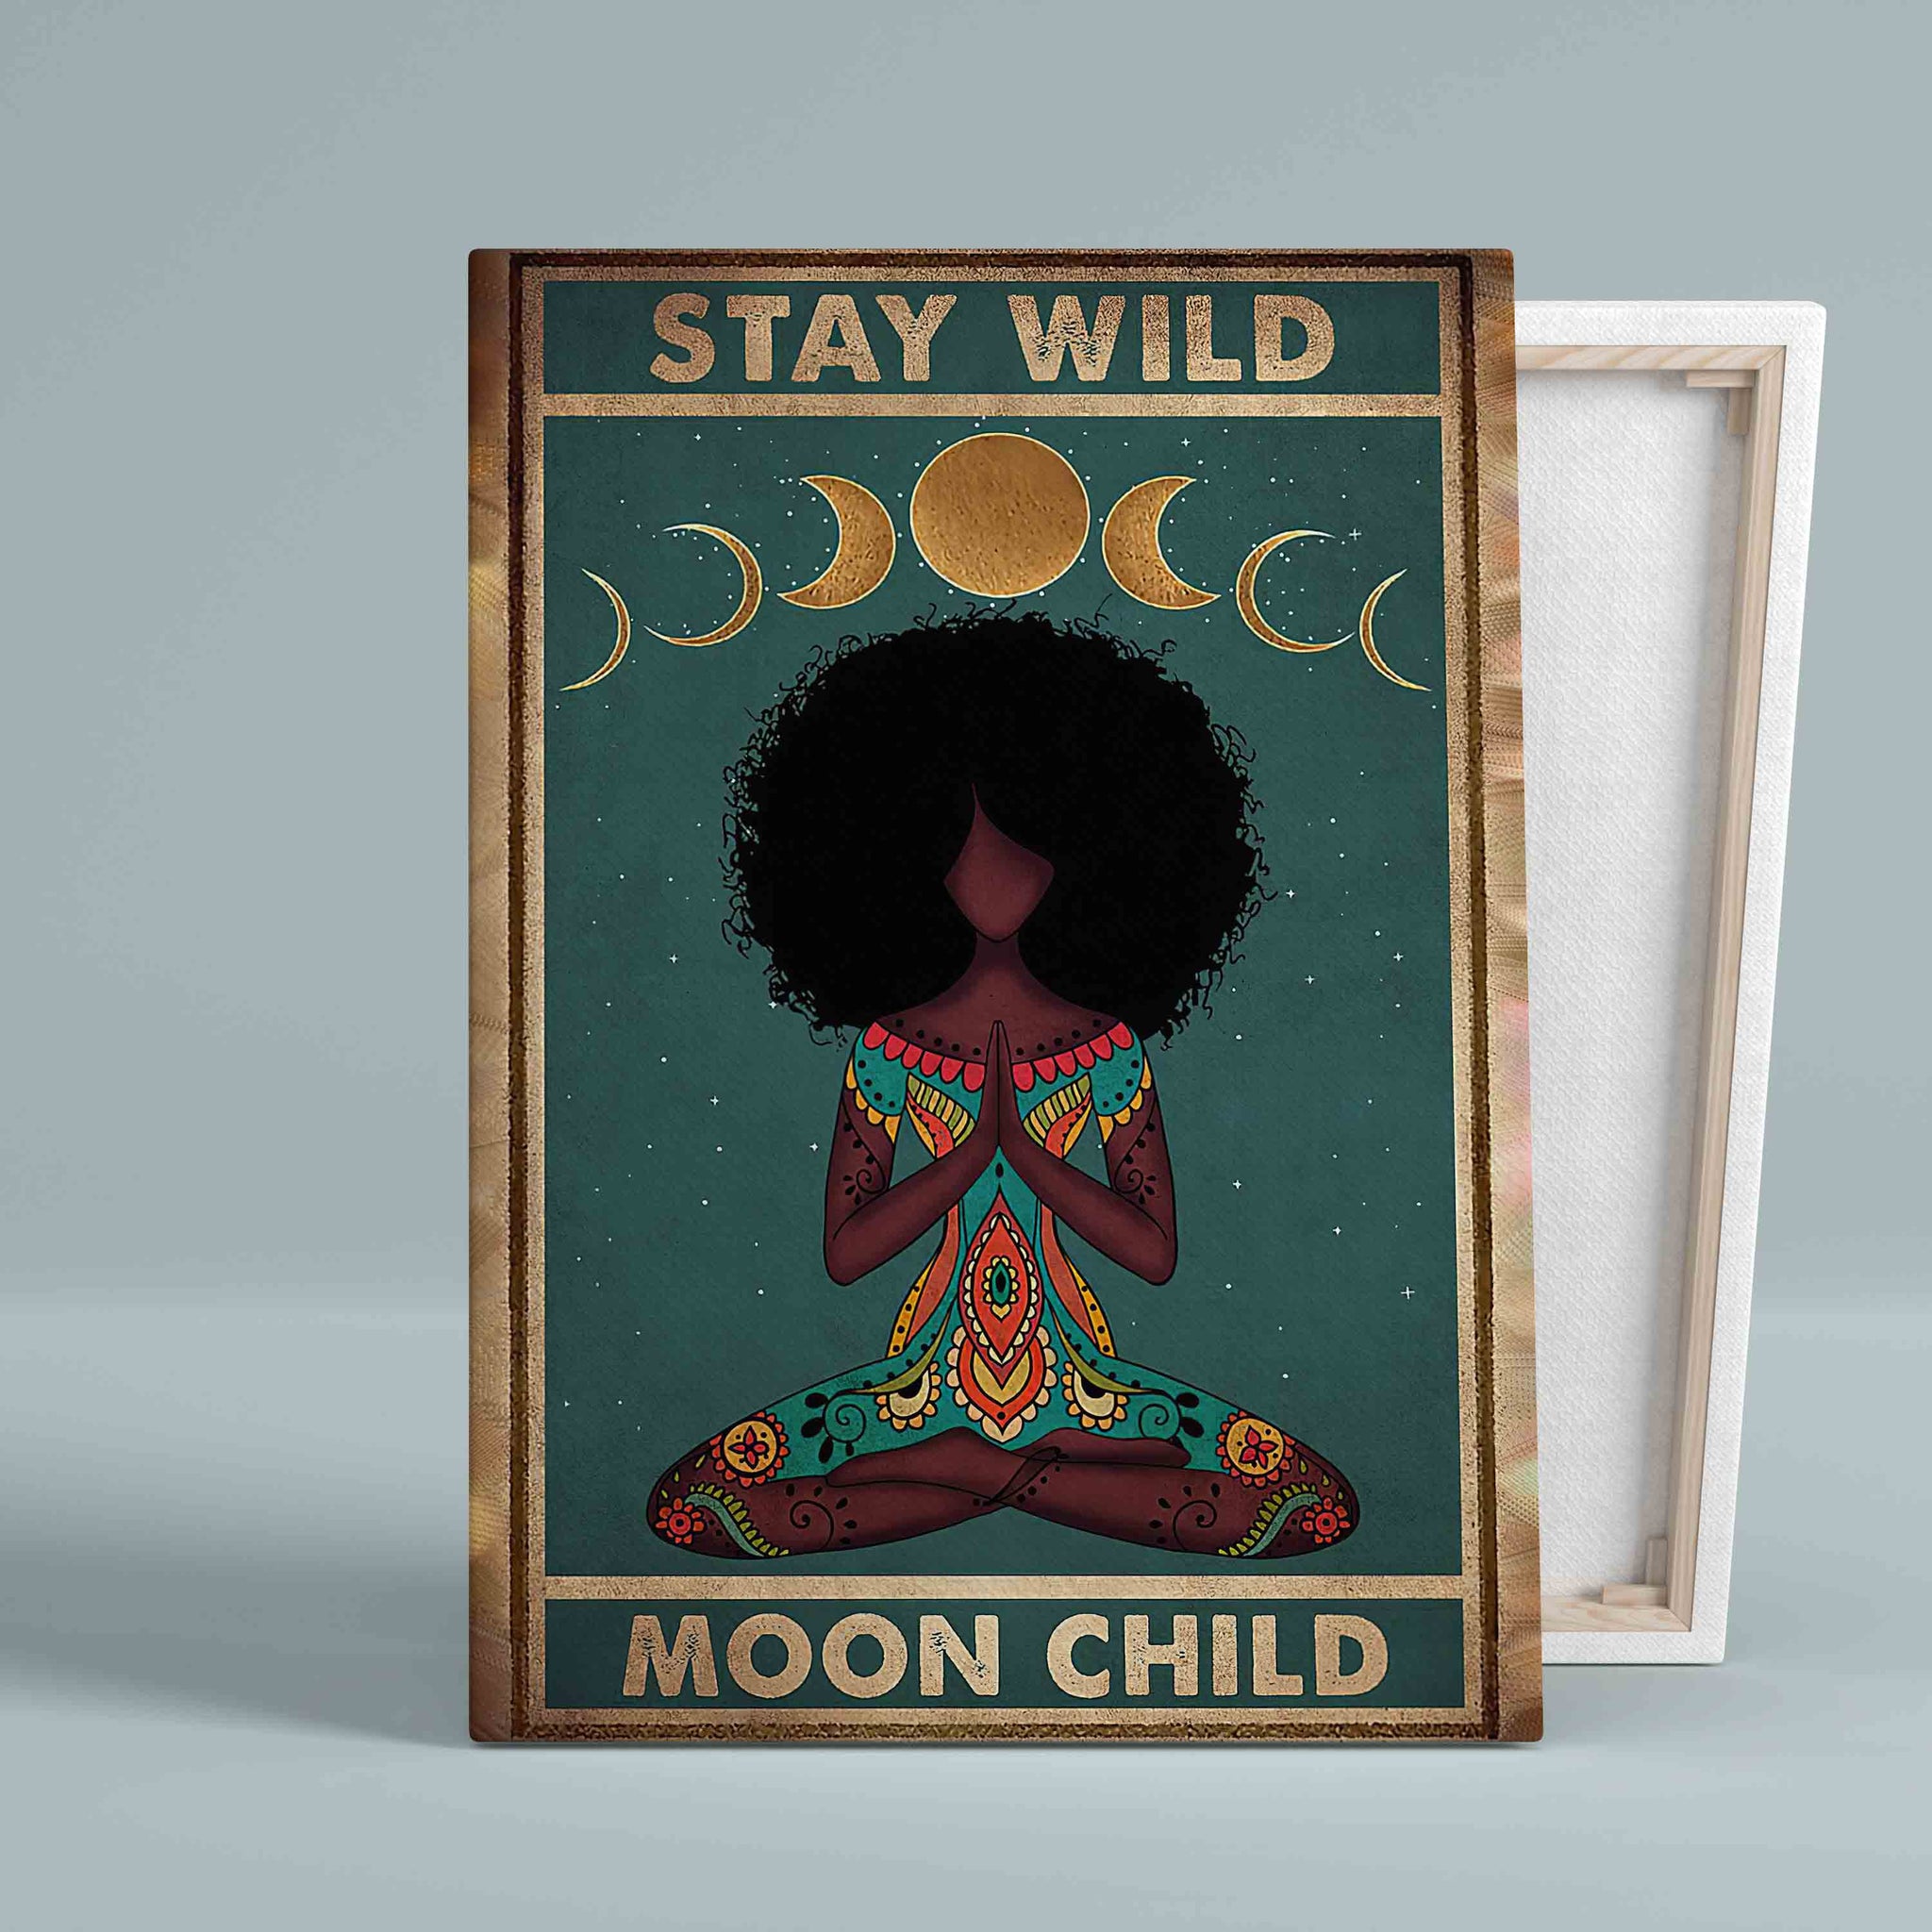 Stay Wild Canvas, Moon Child Canvas, Yoga Canvas, Black Woman Canvas, Yoga Pose Canvas